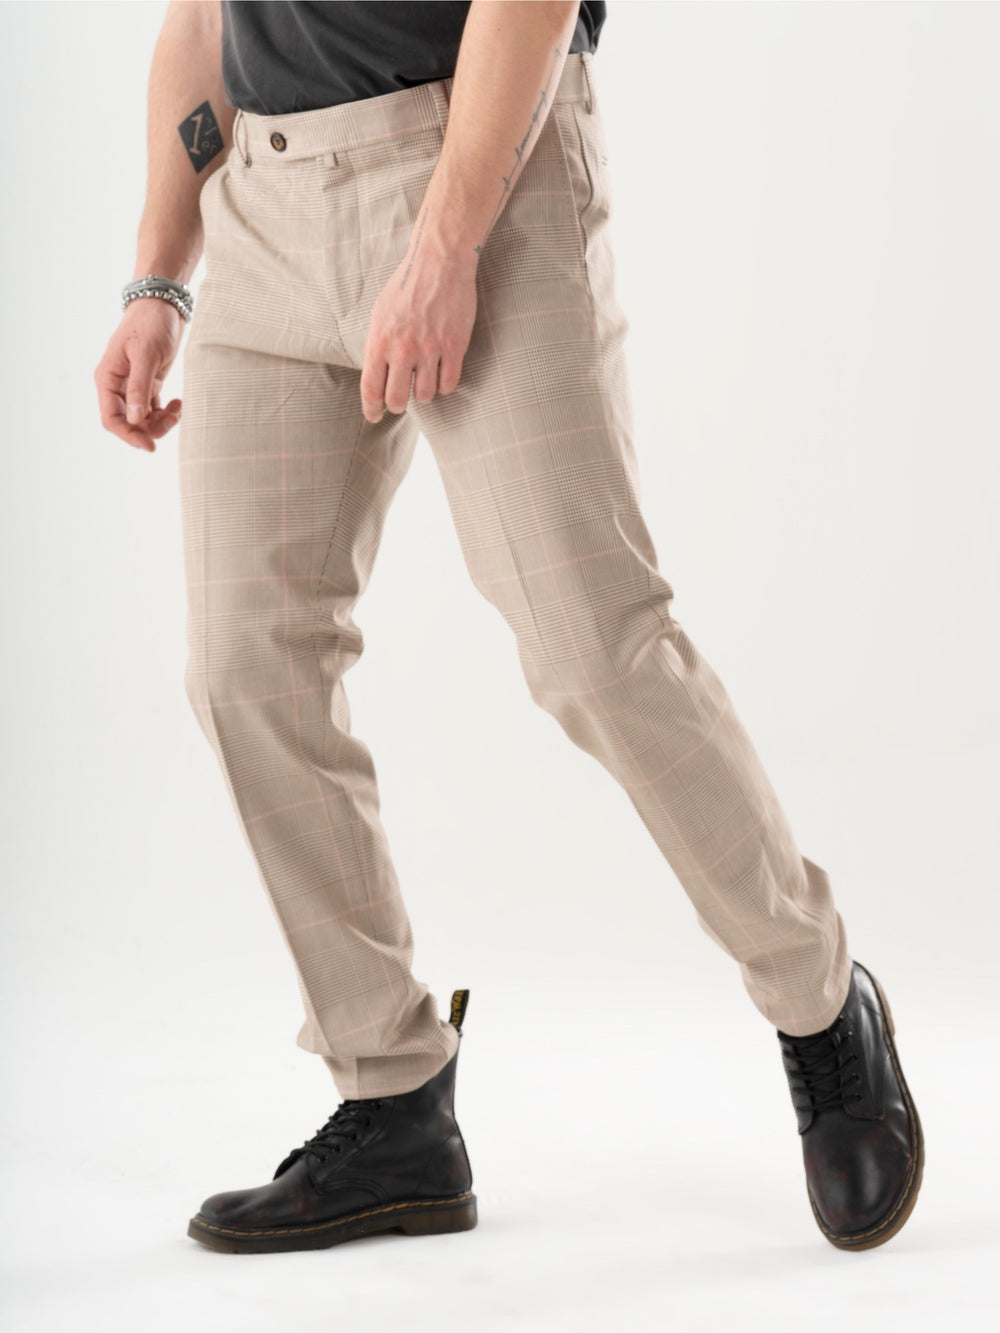 A man is standing in a studio wearing MOONSHOT PANTS.